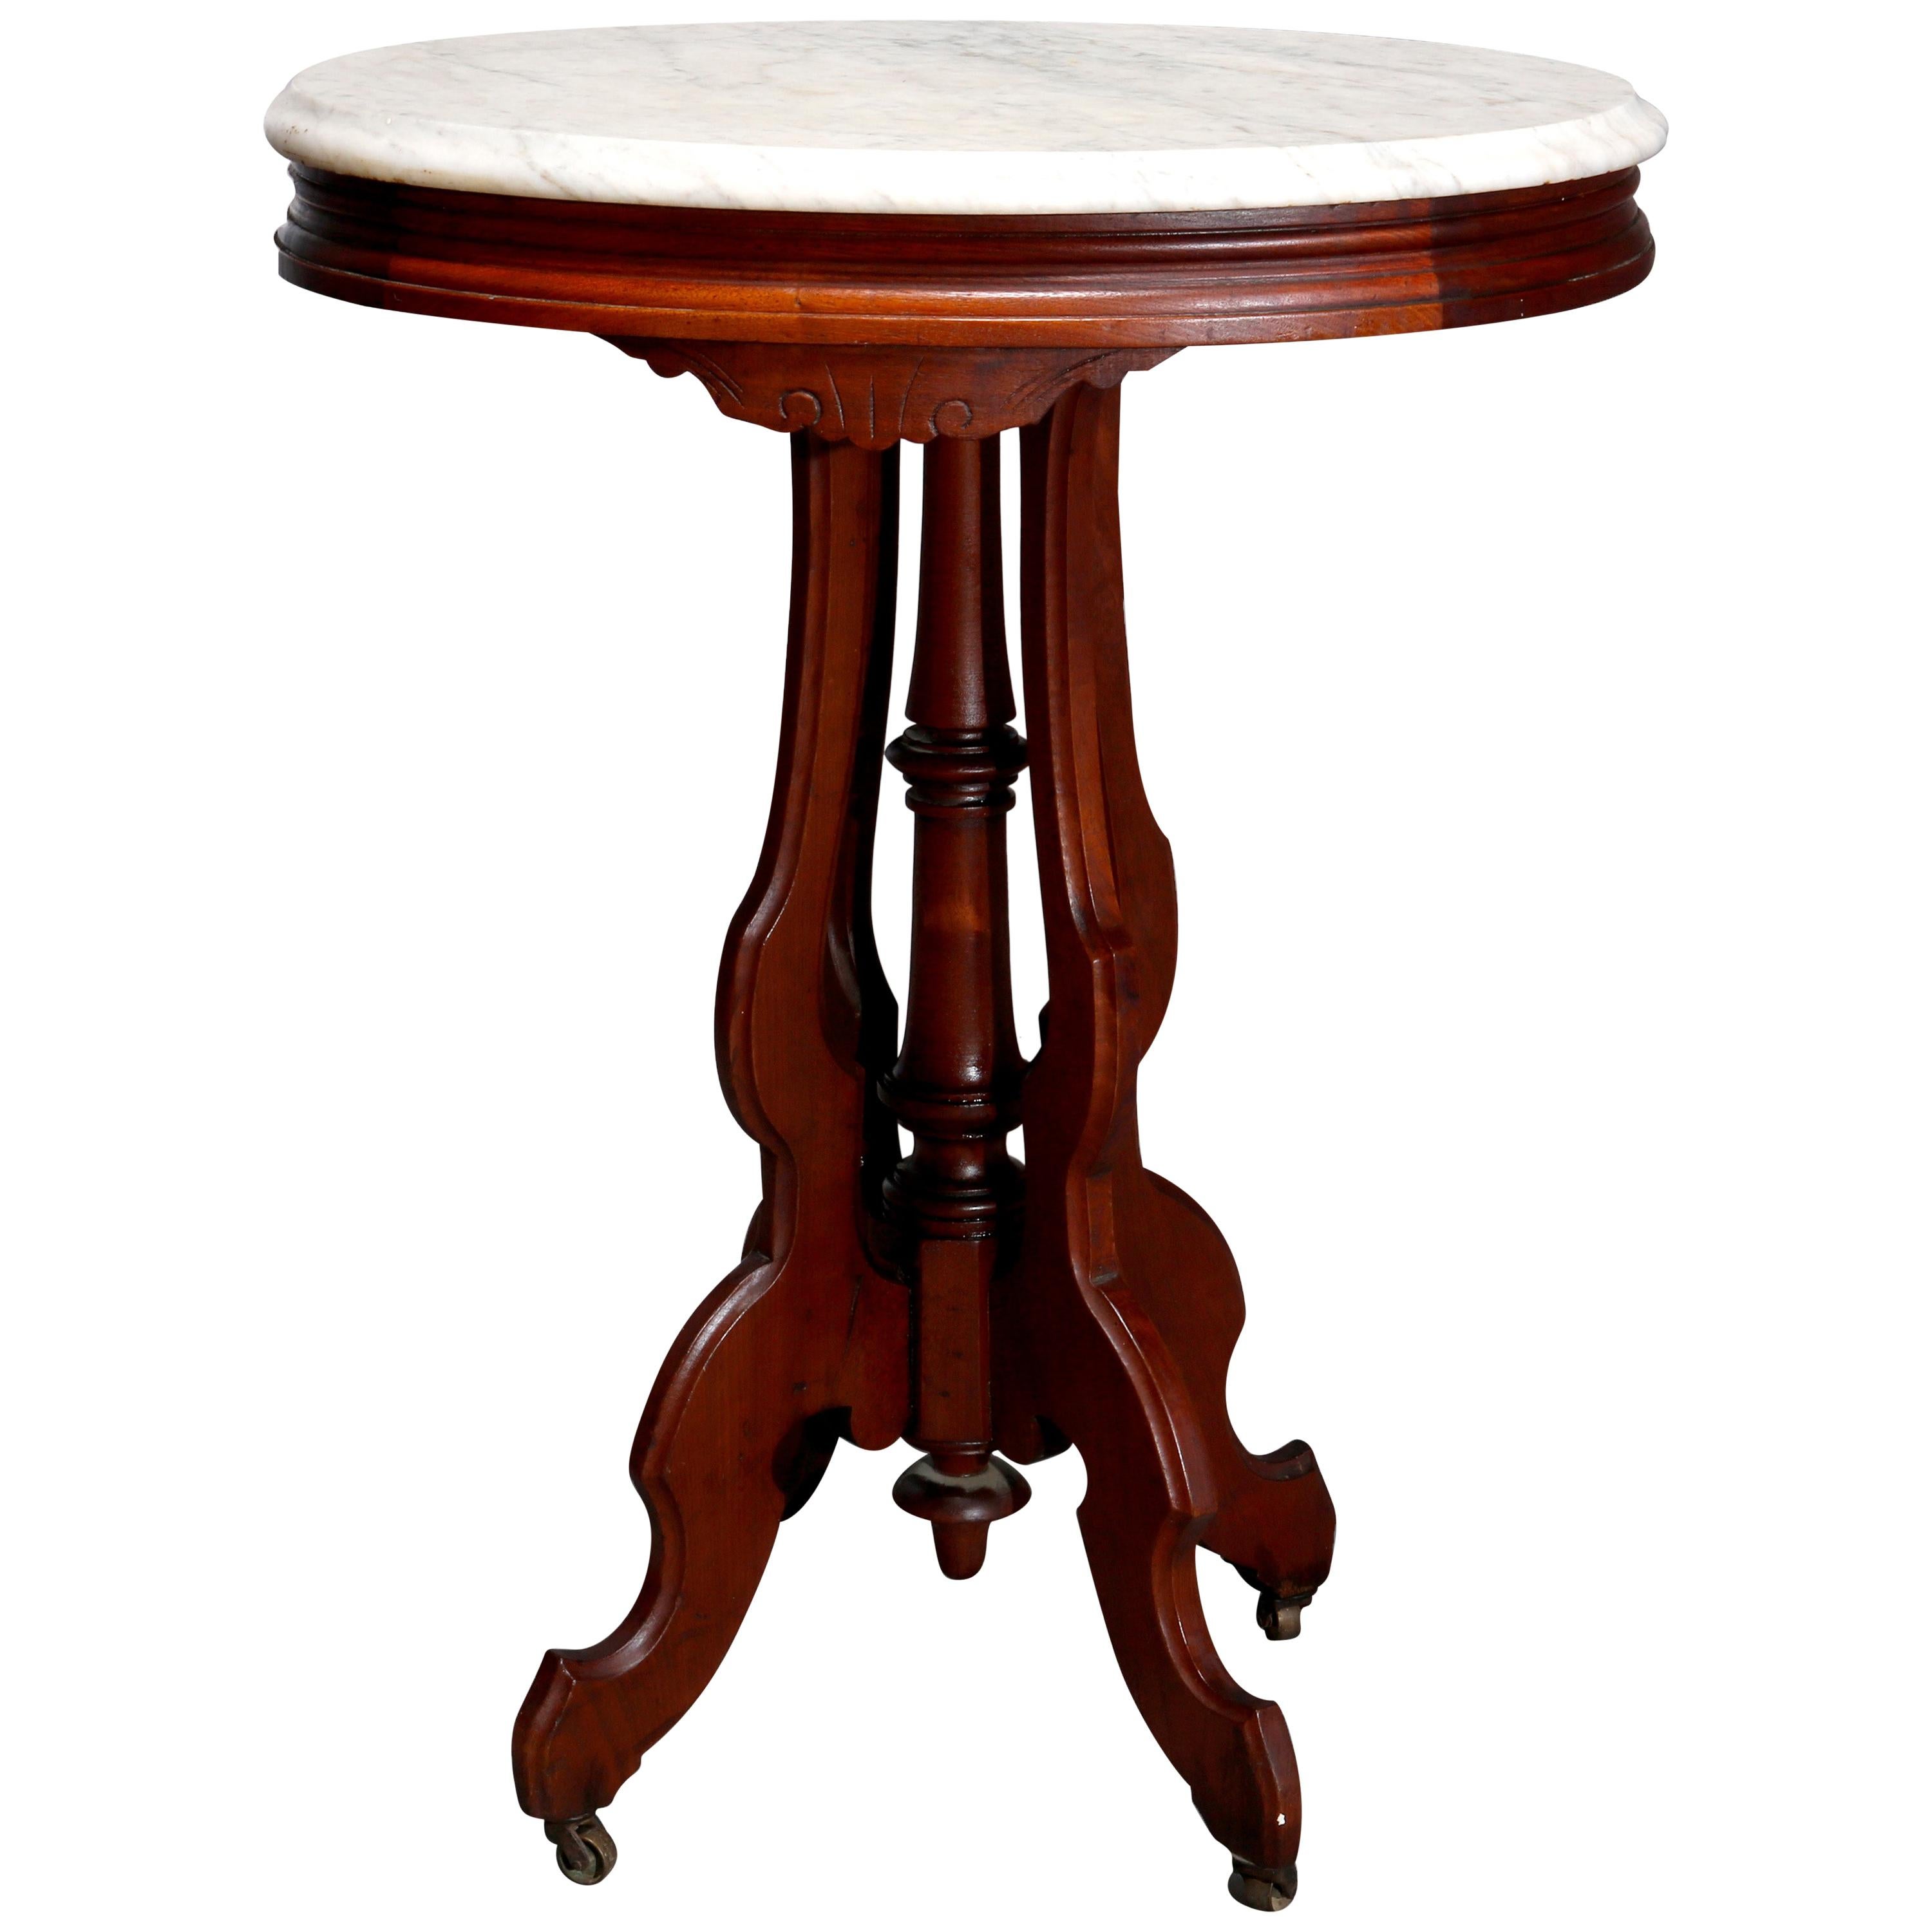 Antique Renaissance Revival Walnut Oval Marble Top Table, Circa 1890